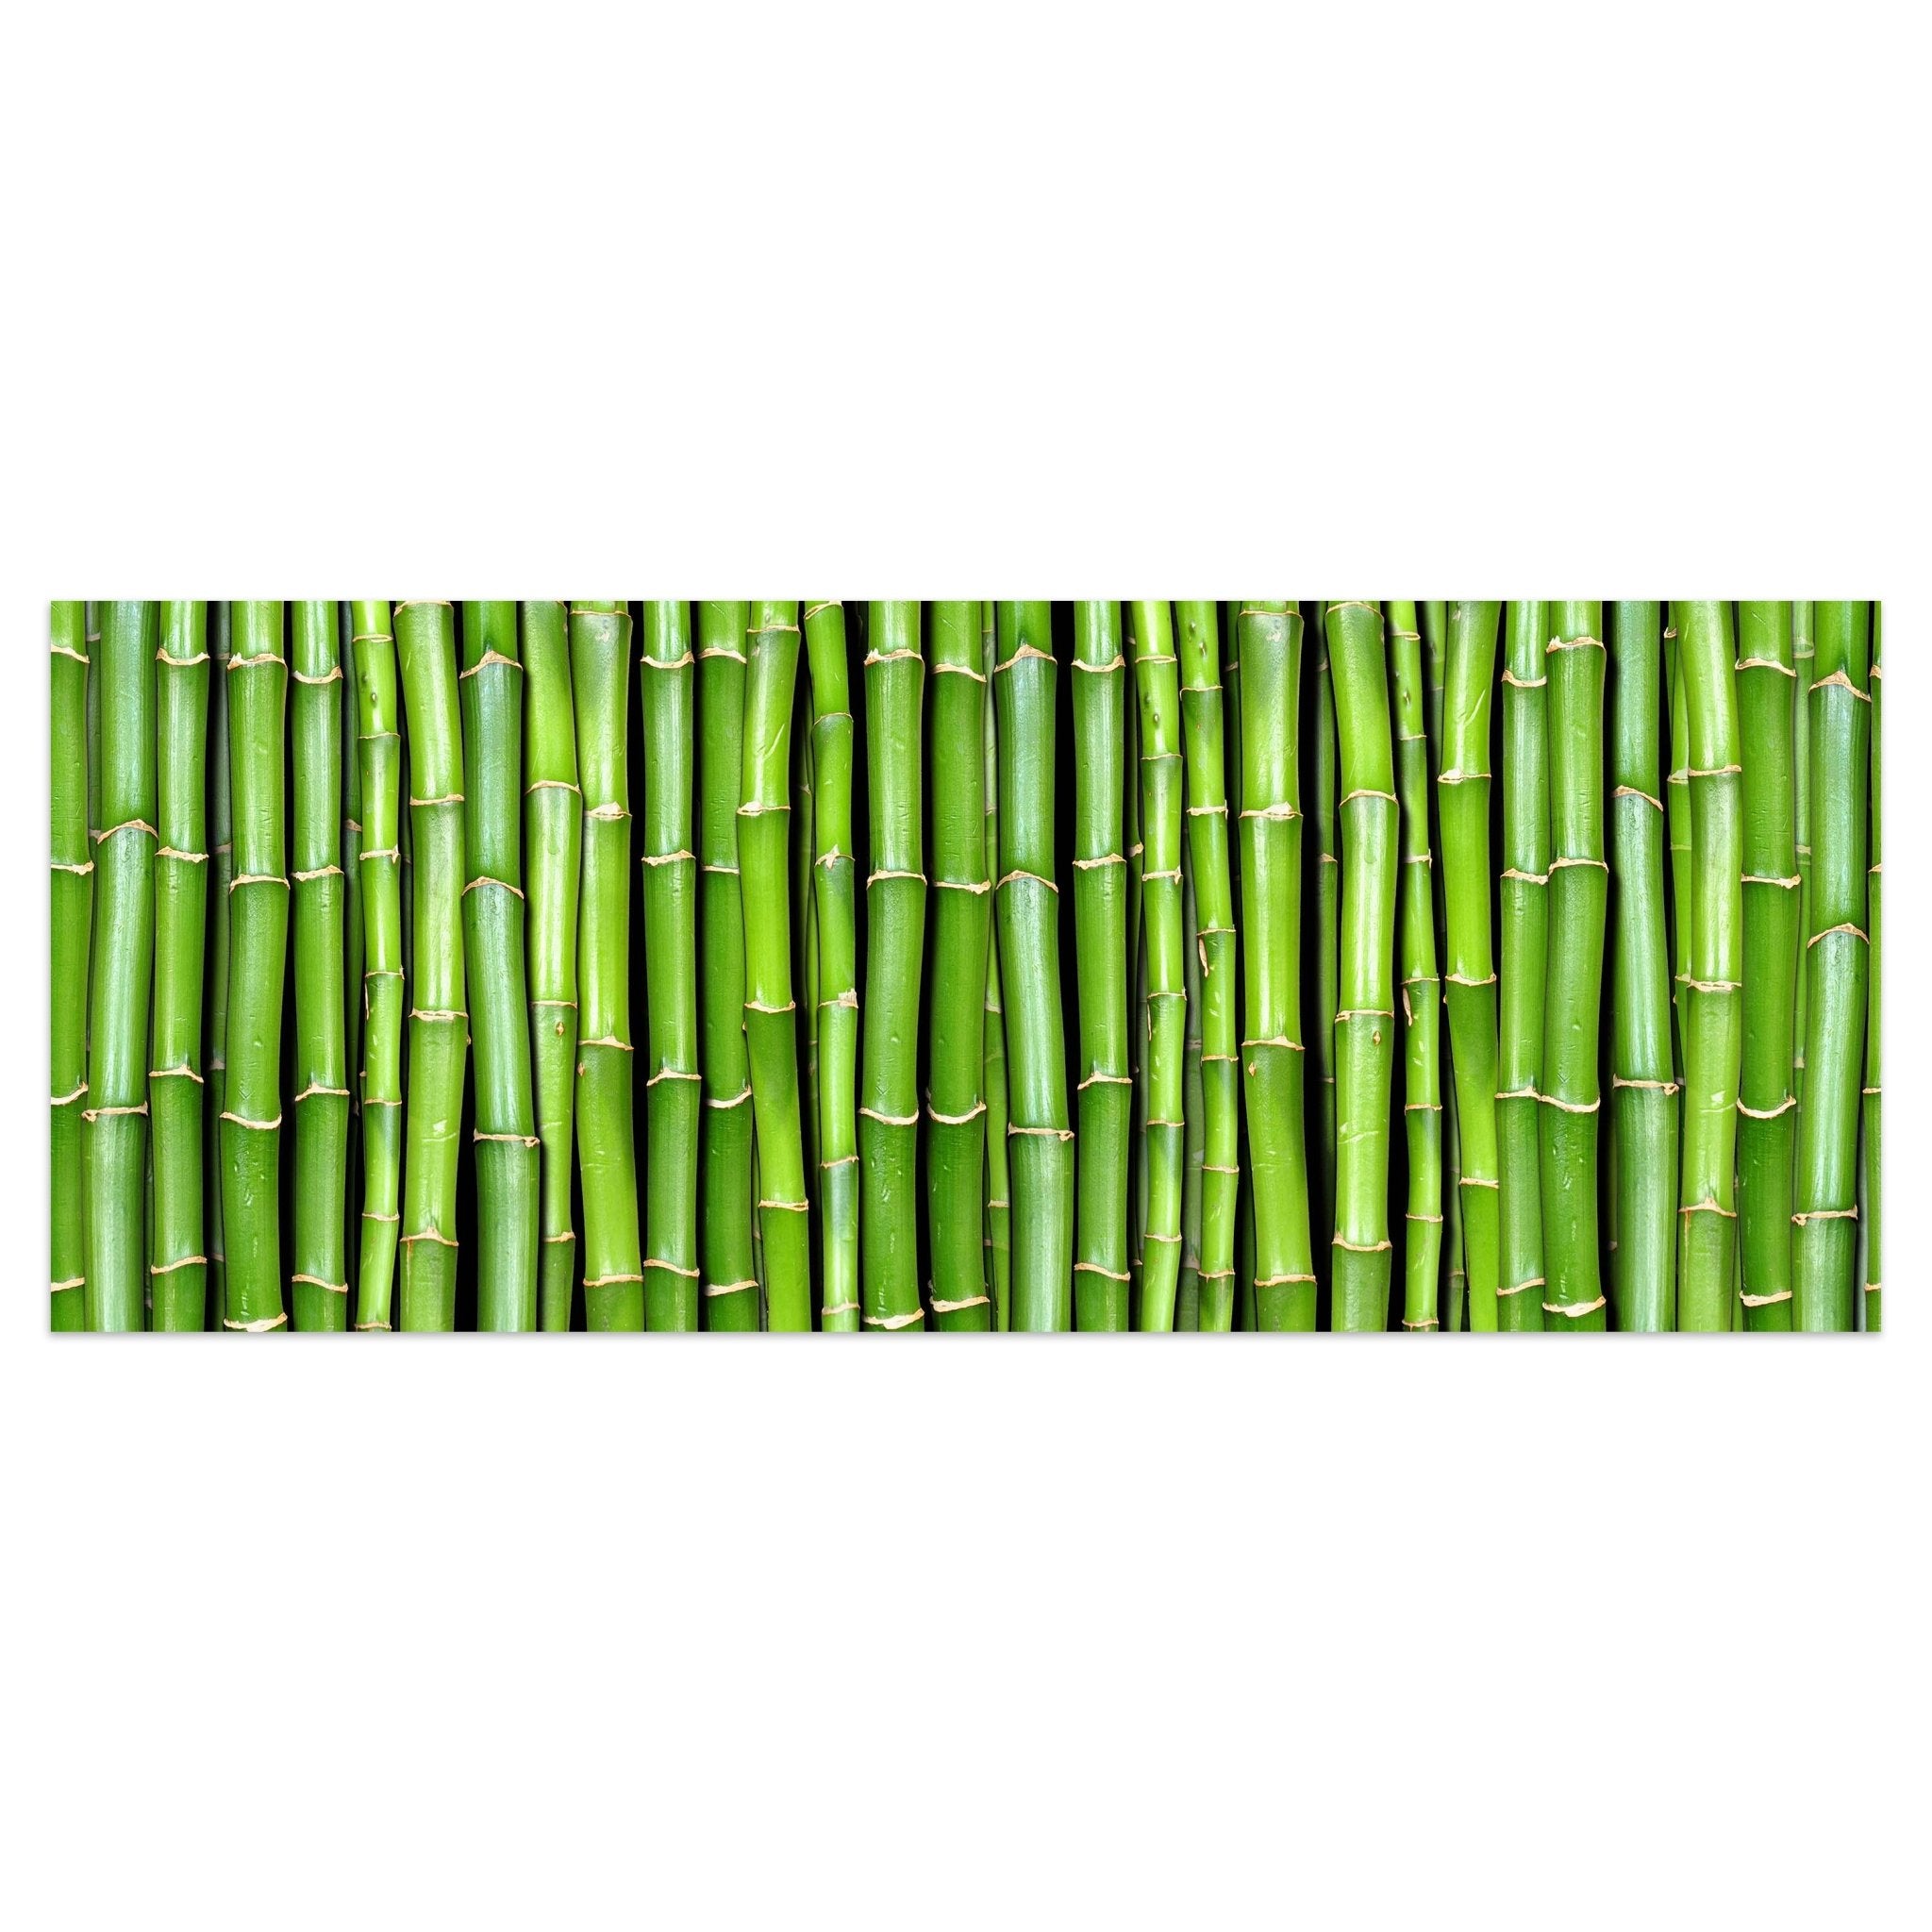 Leinwandbild Bambuswand M0054 kaufen - Bild 1